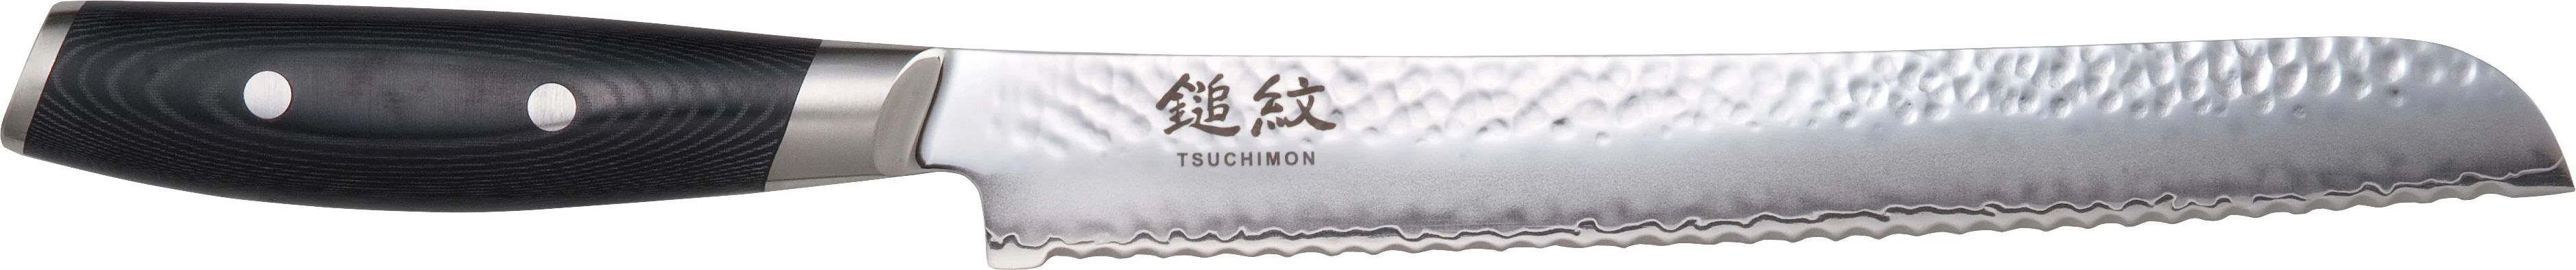 Yaxell Tsuchimon brødkniv, 23 cm